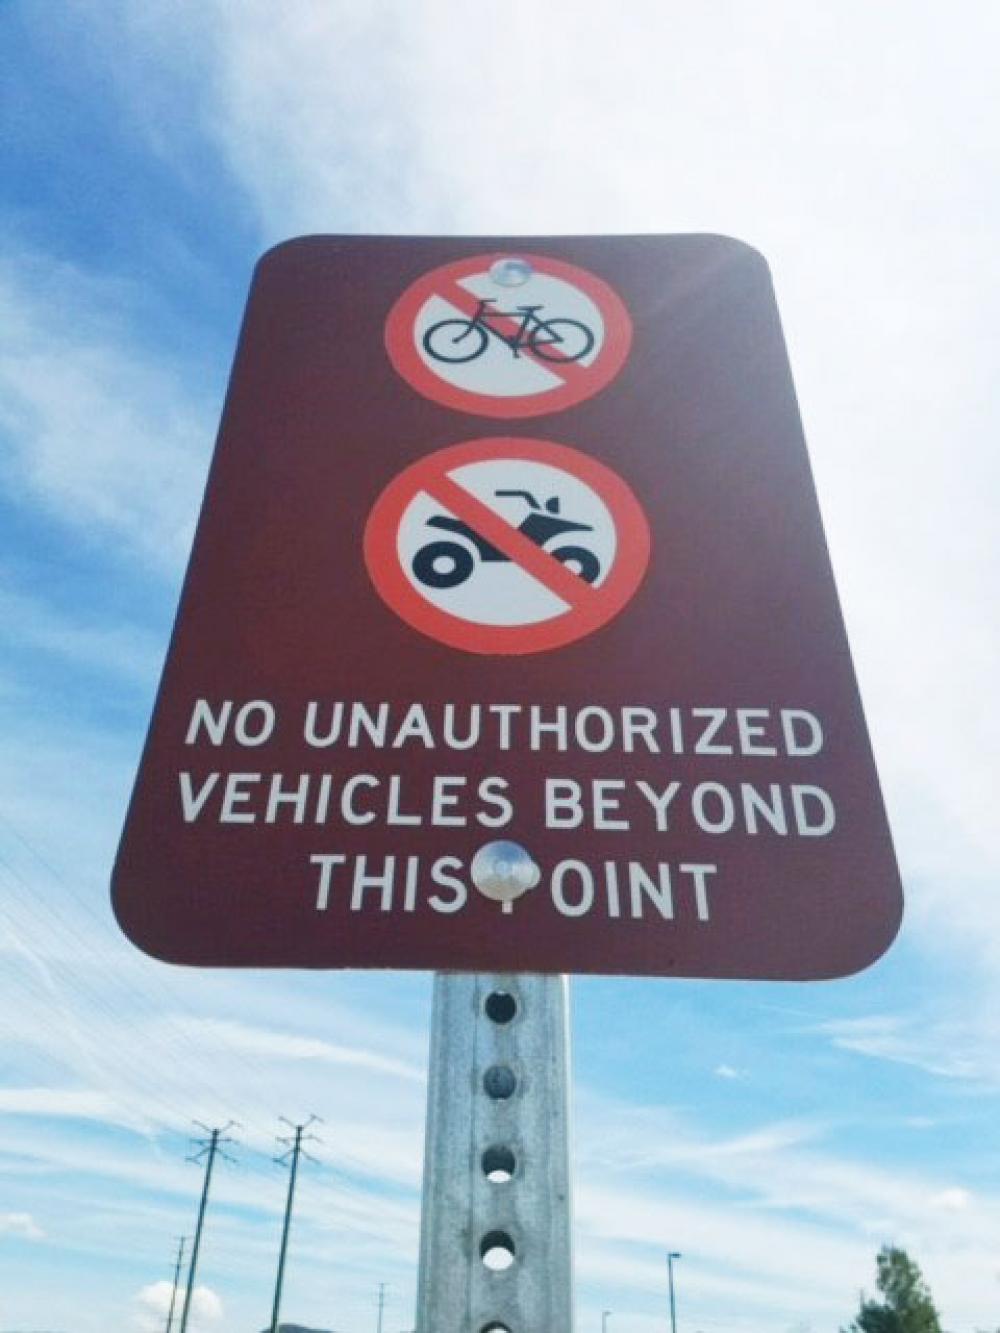 Unauthorized vehicles sign